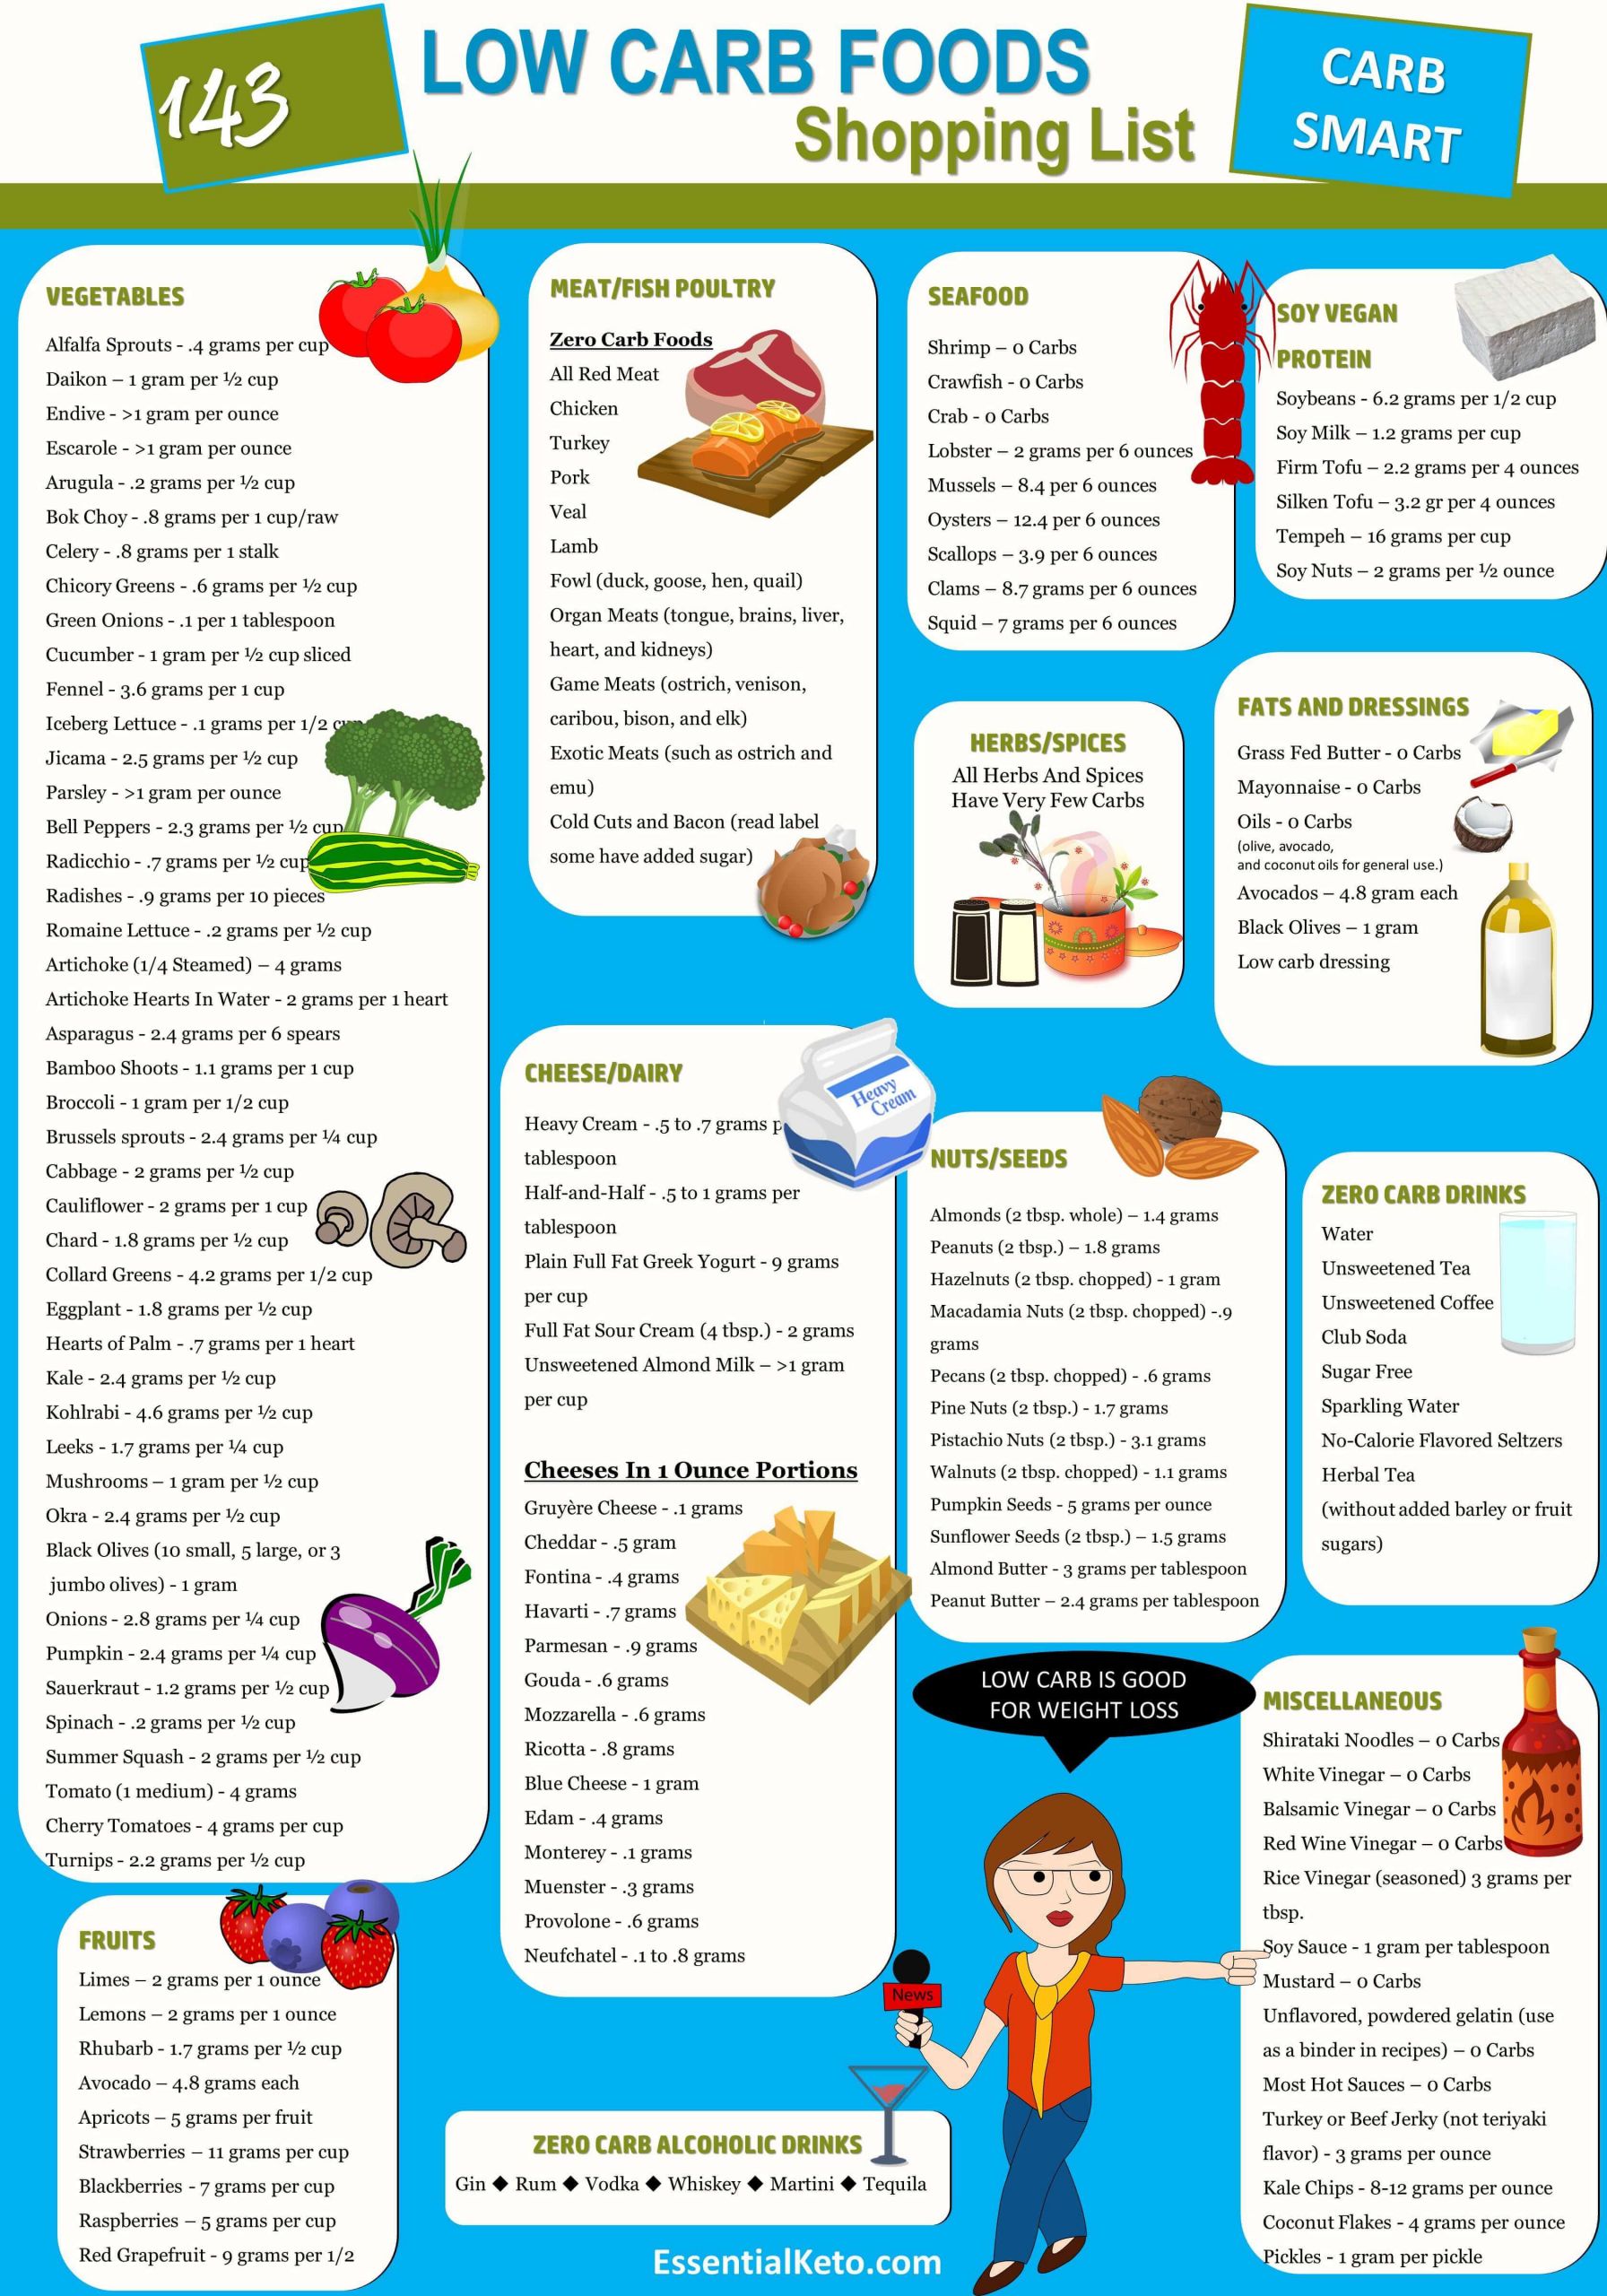 Keto Diet Food List Shopping
 Ketogenic Diet Foods Shopping List